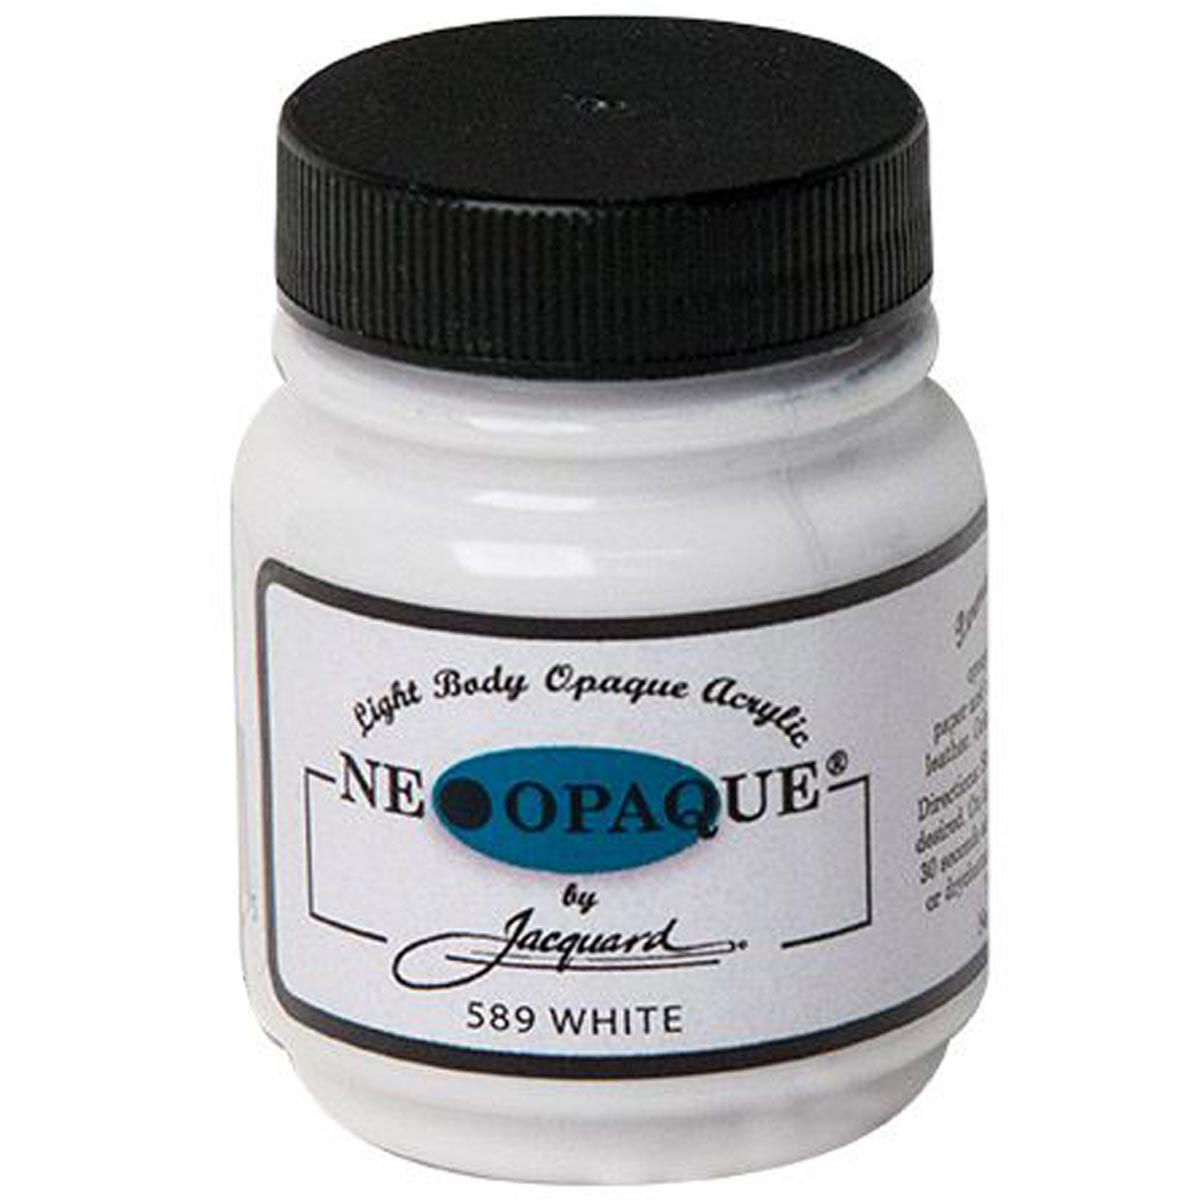 Jacquard Neopaque Acrylic 589 White 2.25 oz